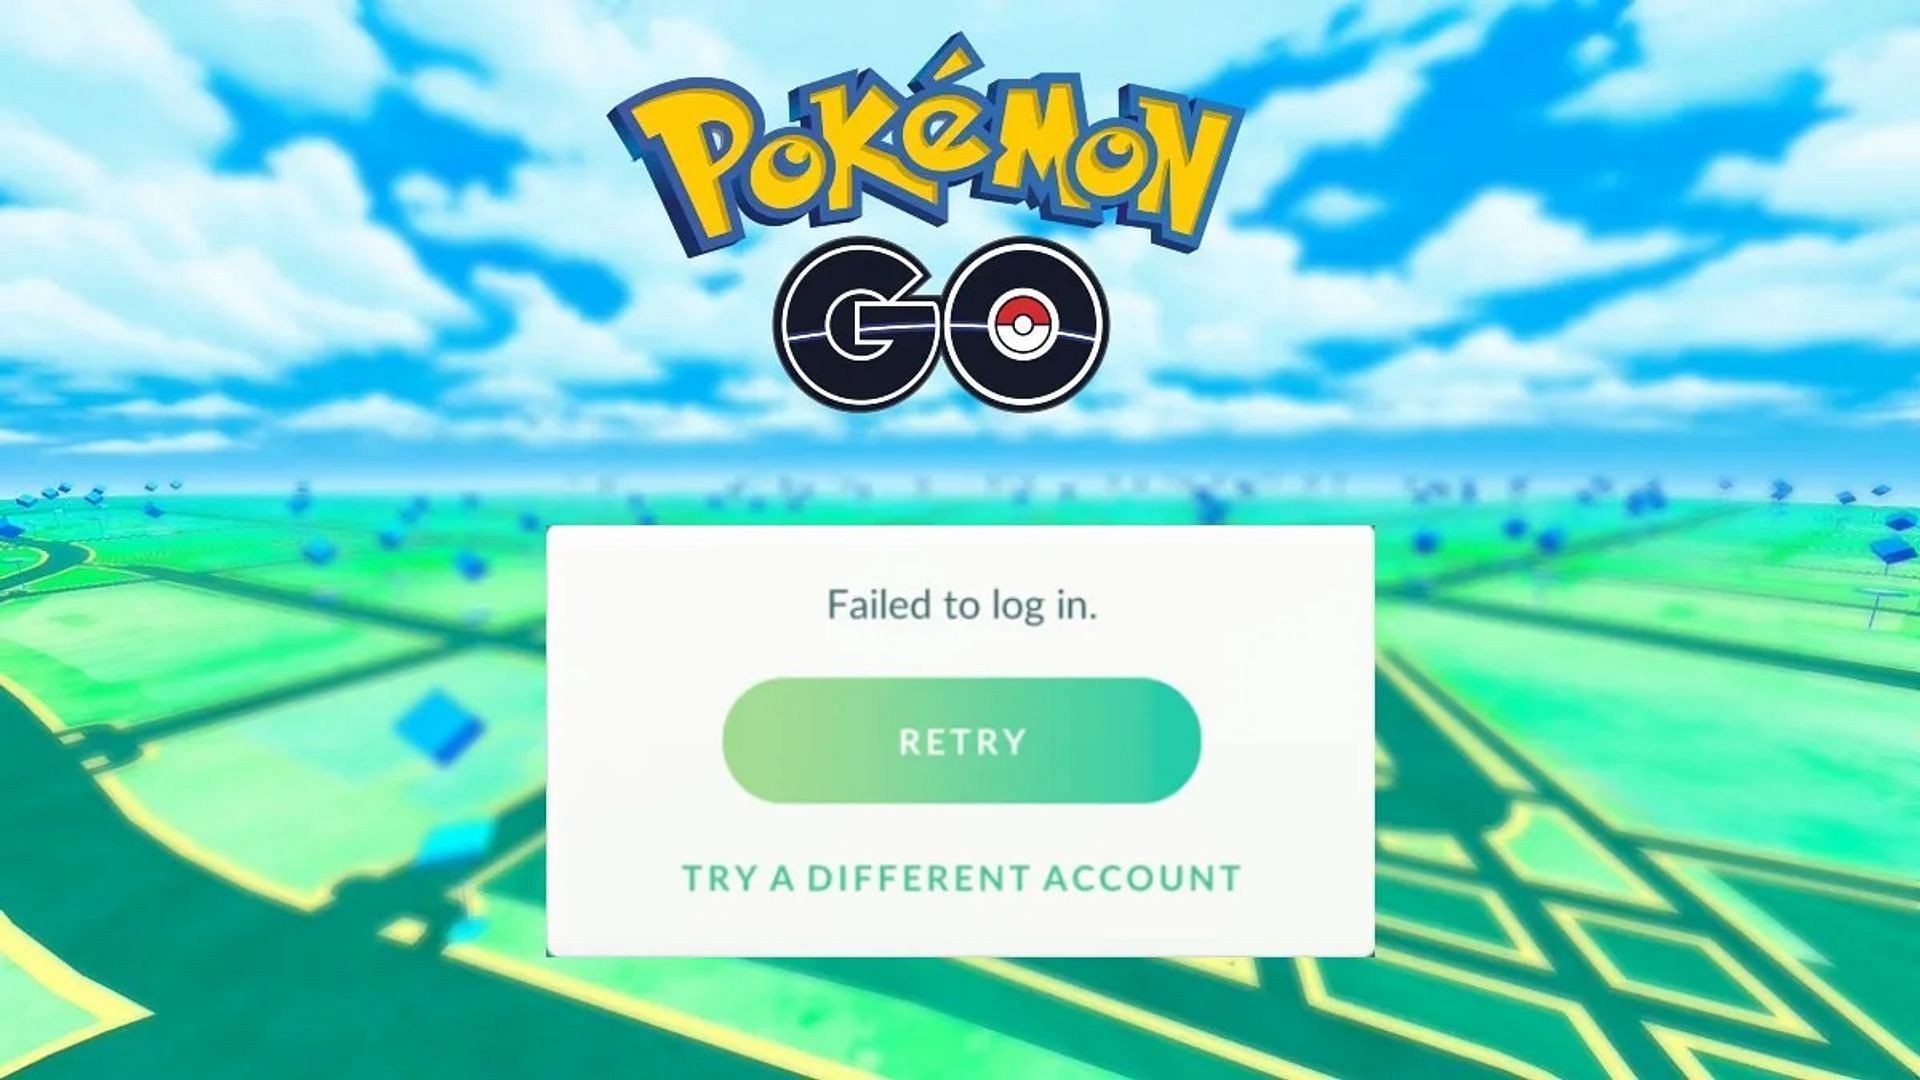 How To Check Pokemon GO Server Status Online